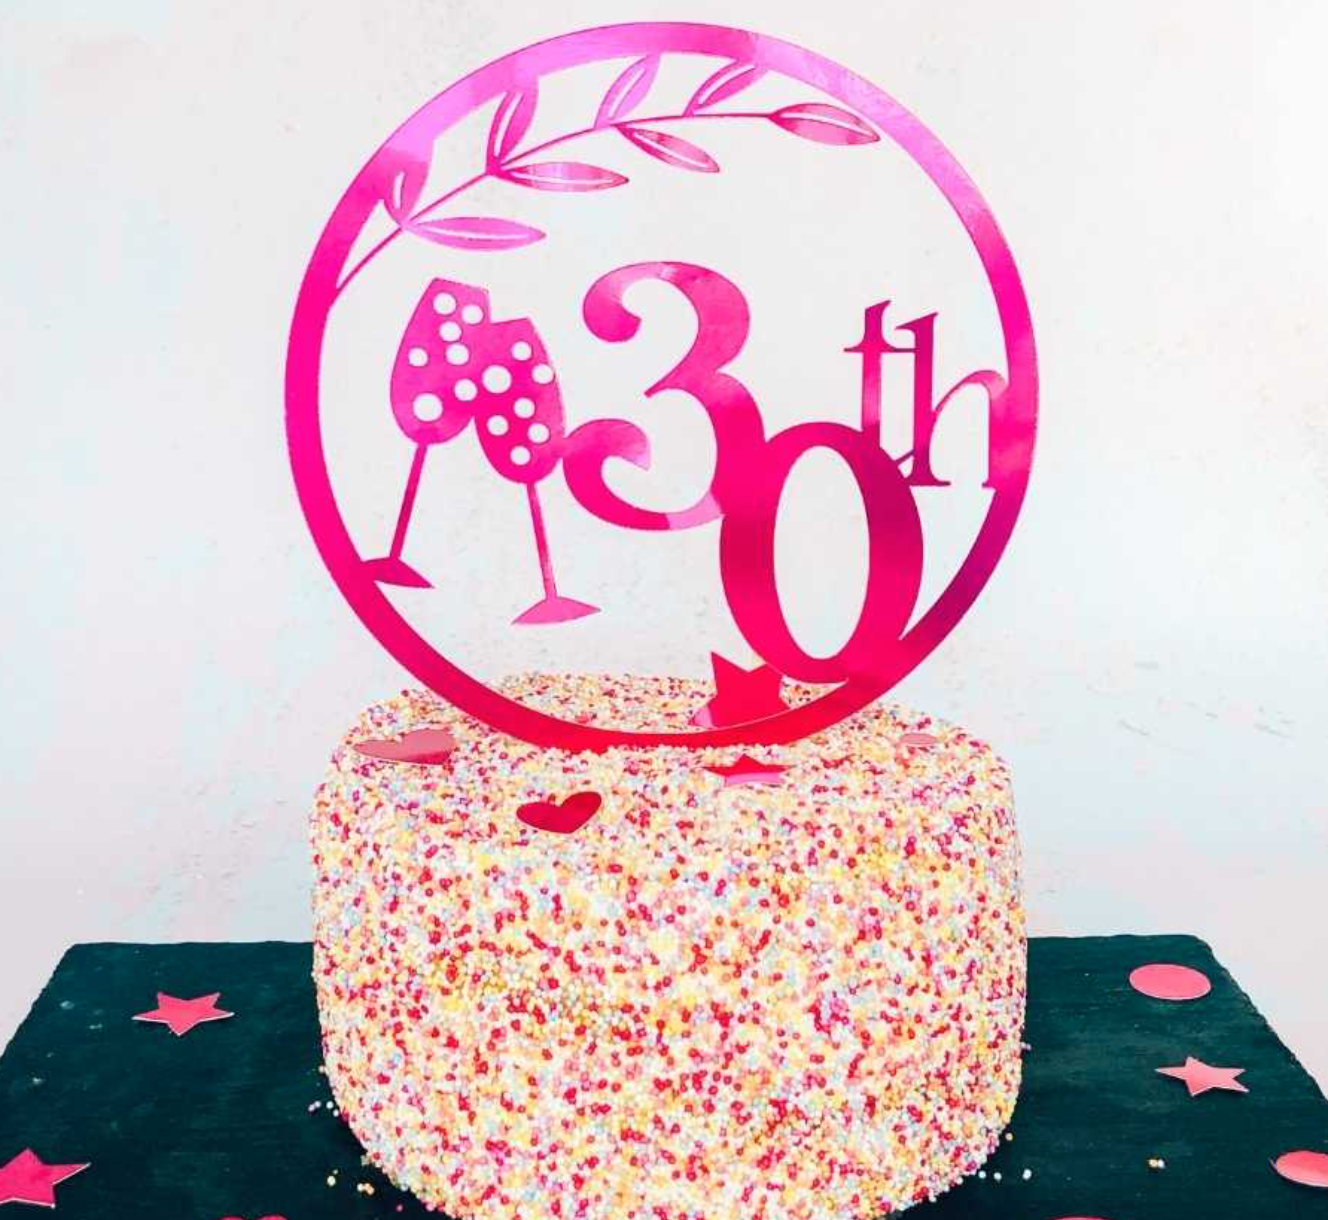 Milestone birthday cake topper